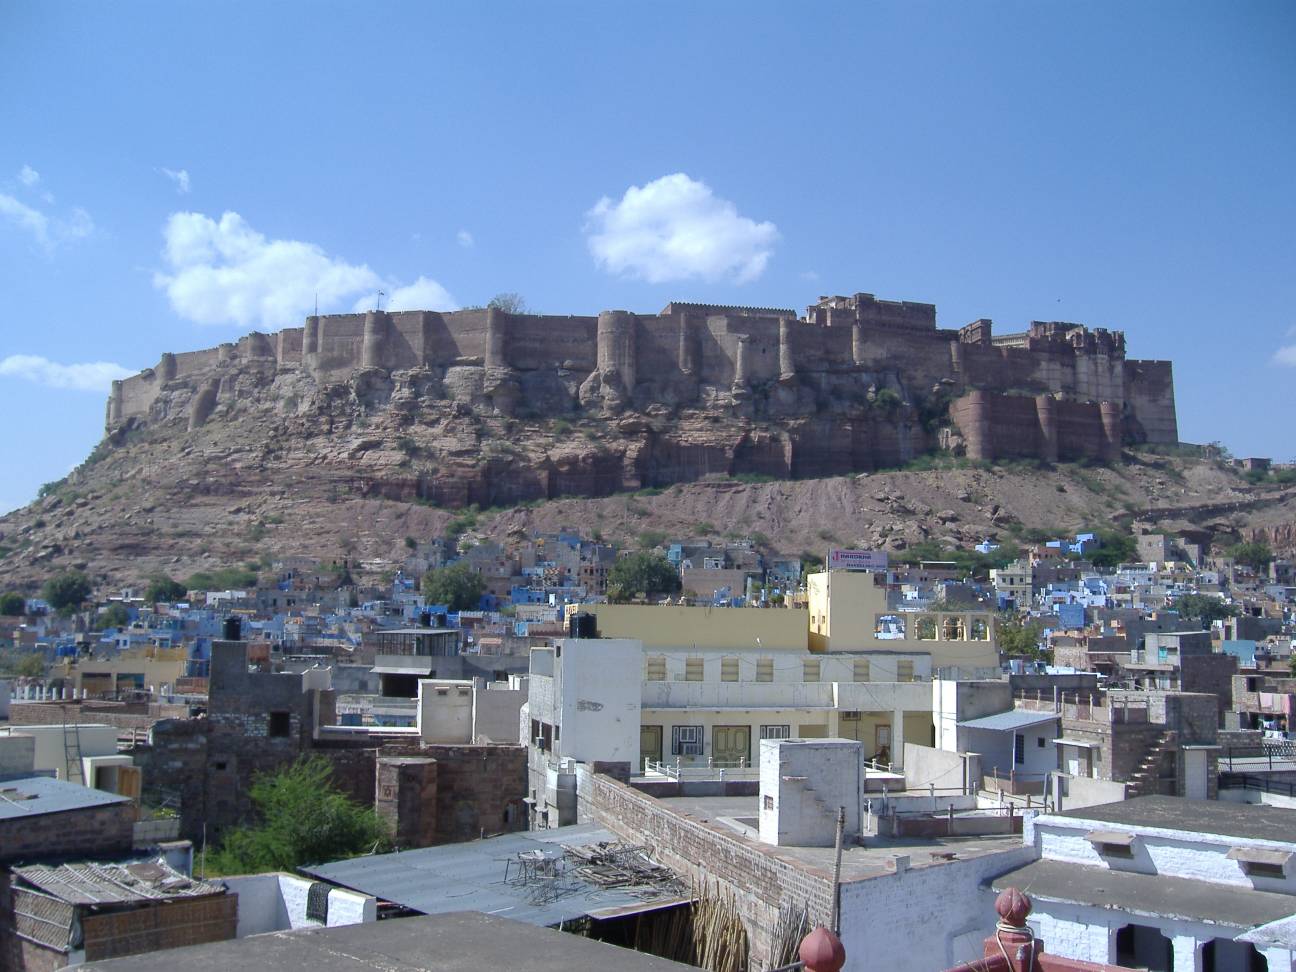 View of Mehrangarh fort in Jodhpur